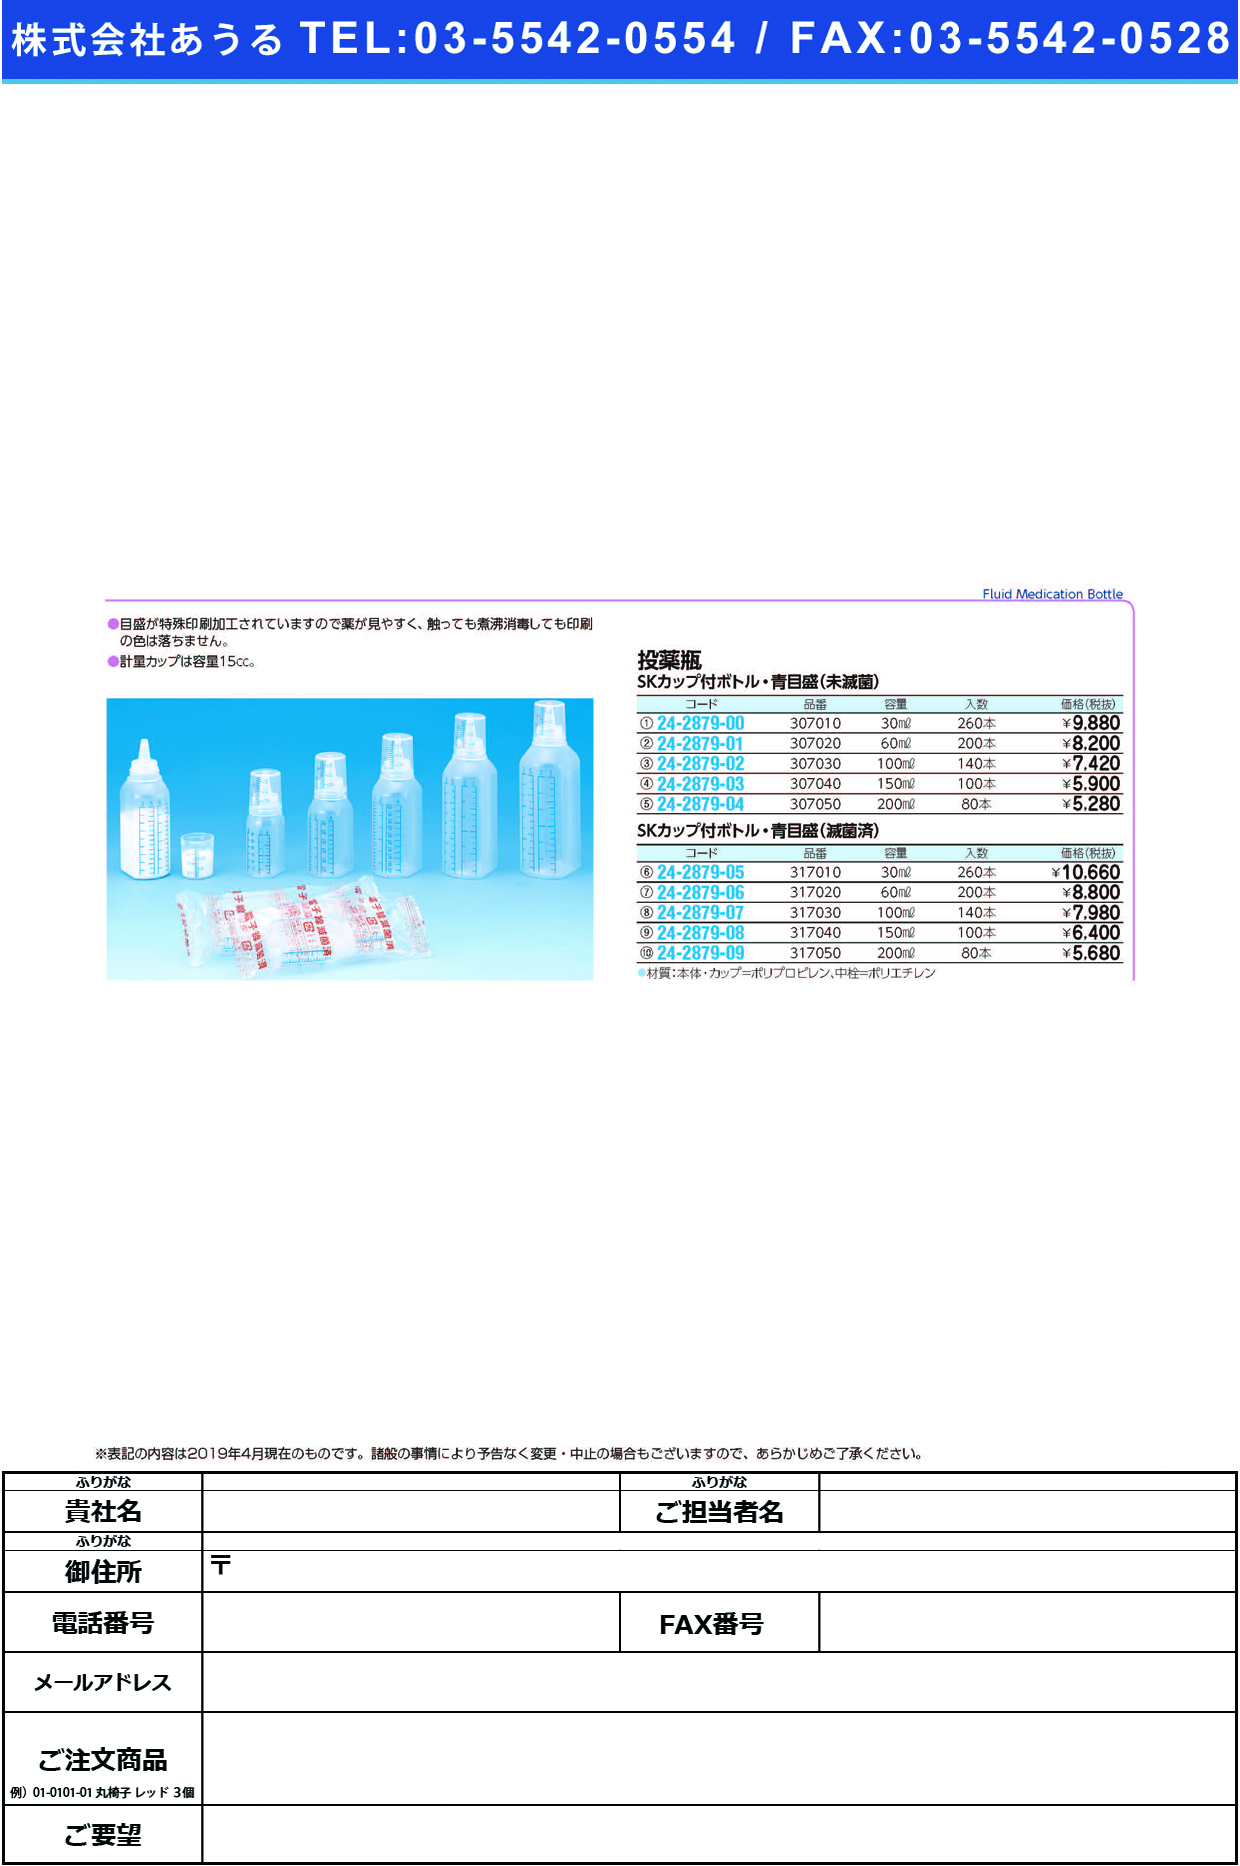 (24-2879-09)ＳＫカップ付ボトル青目盛（滅菌済） 200ML(80ﾎﾝｲﾘ) SKｶｯﾌﾟﾂｷﾎﾞﾄﾙﾒｯｷﾝｽﾞﾐ【1袋単位】【2019年カタログ商品】